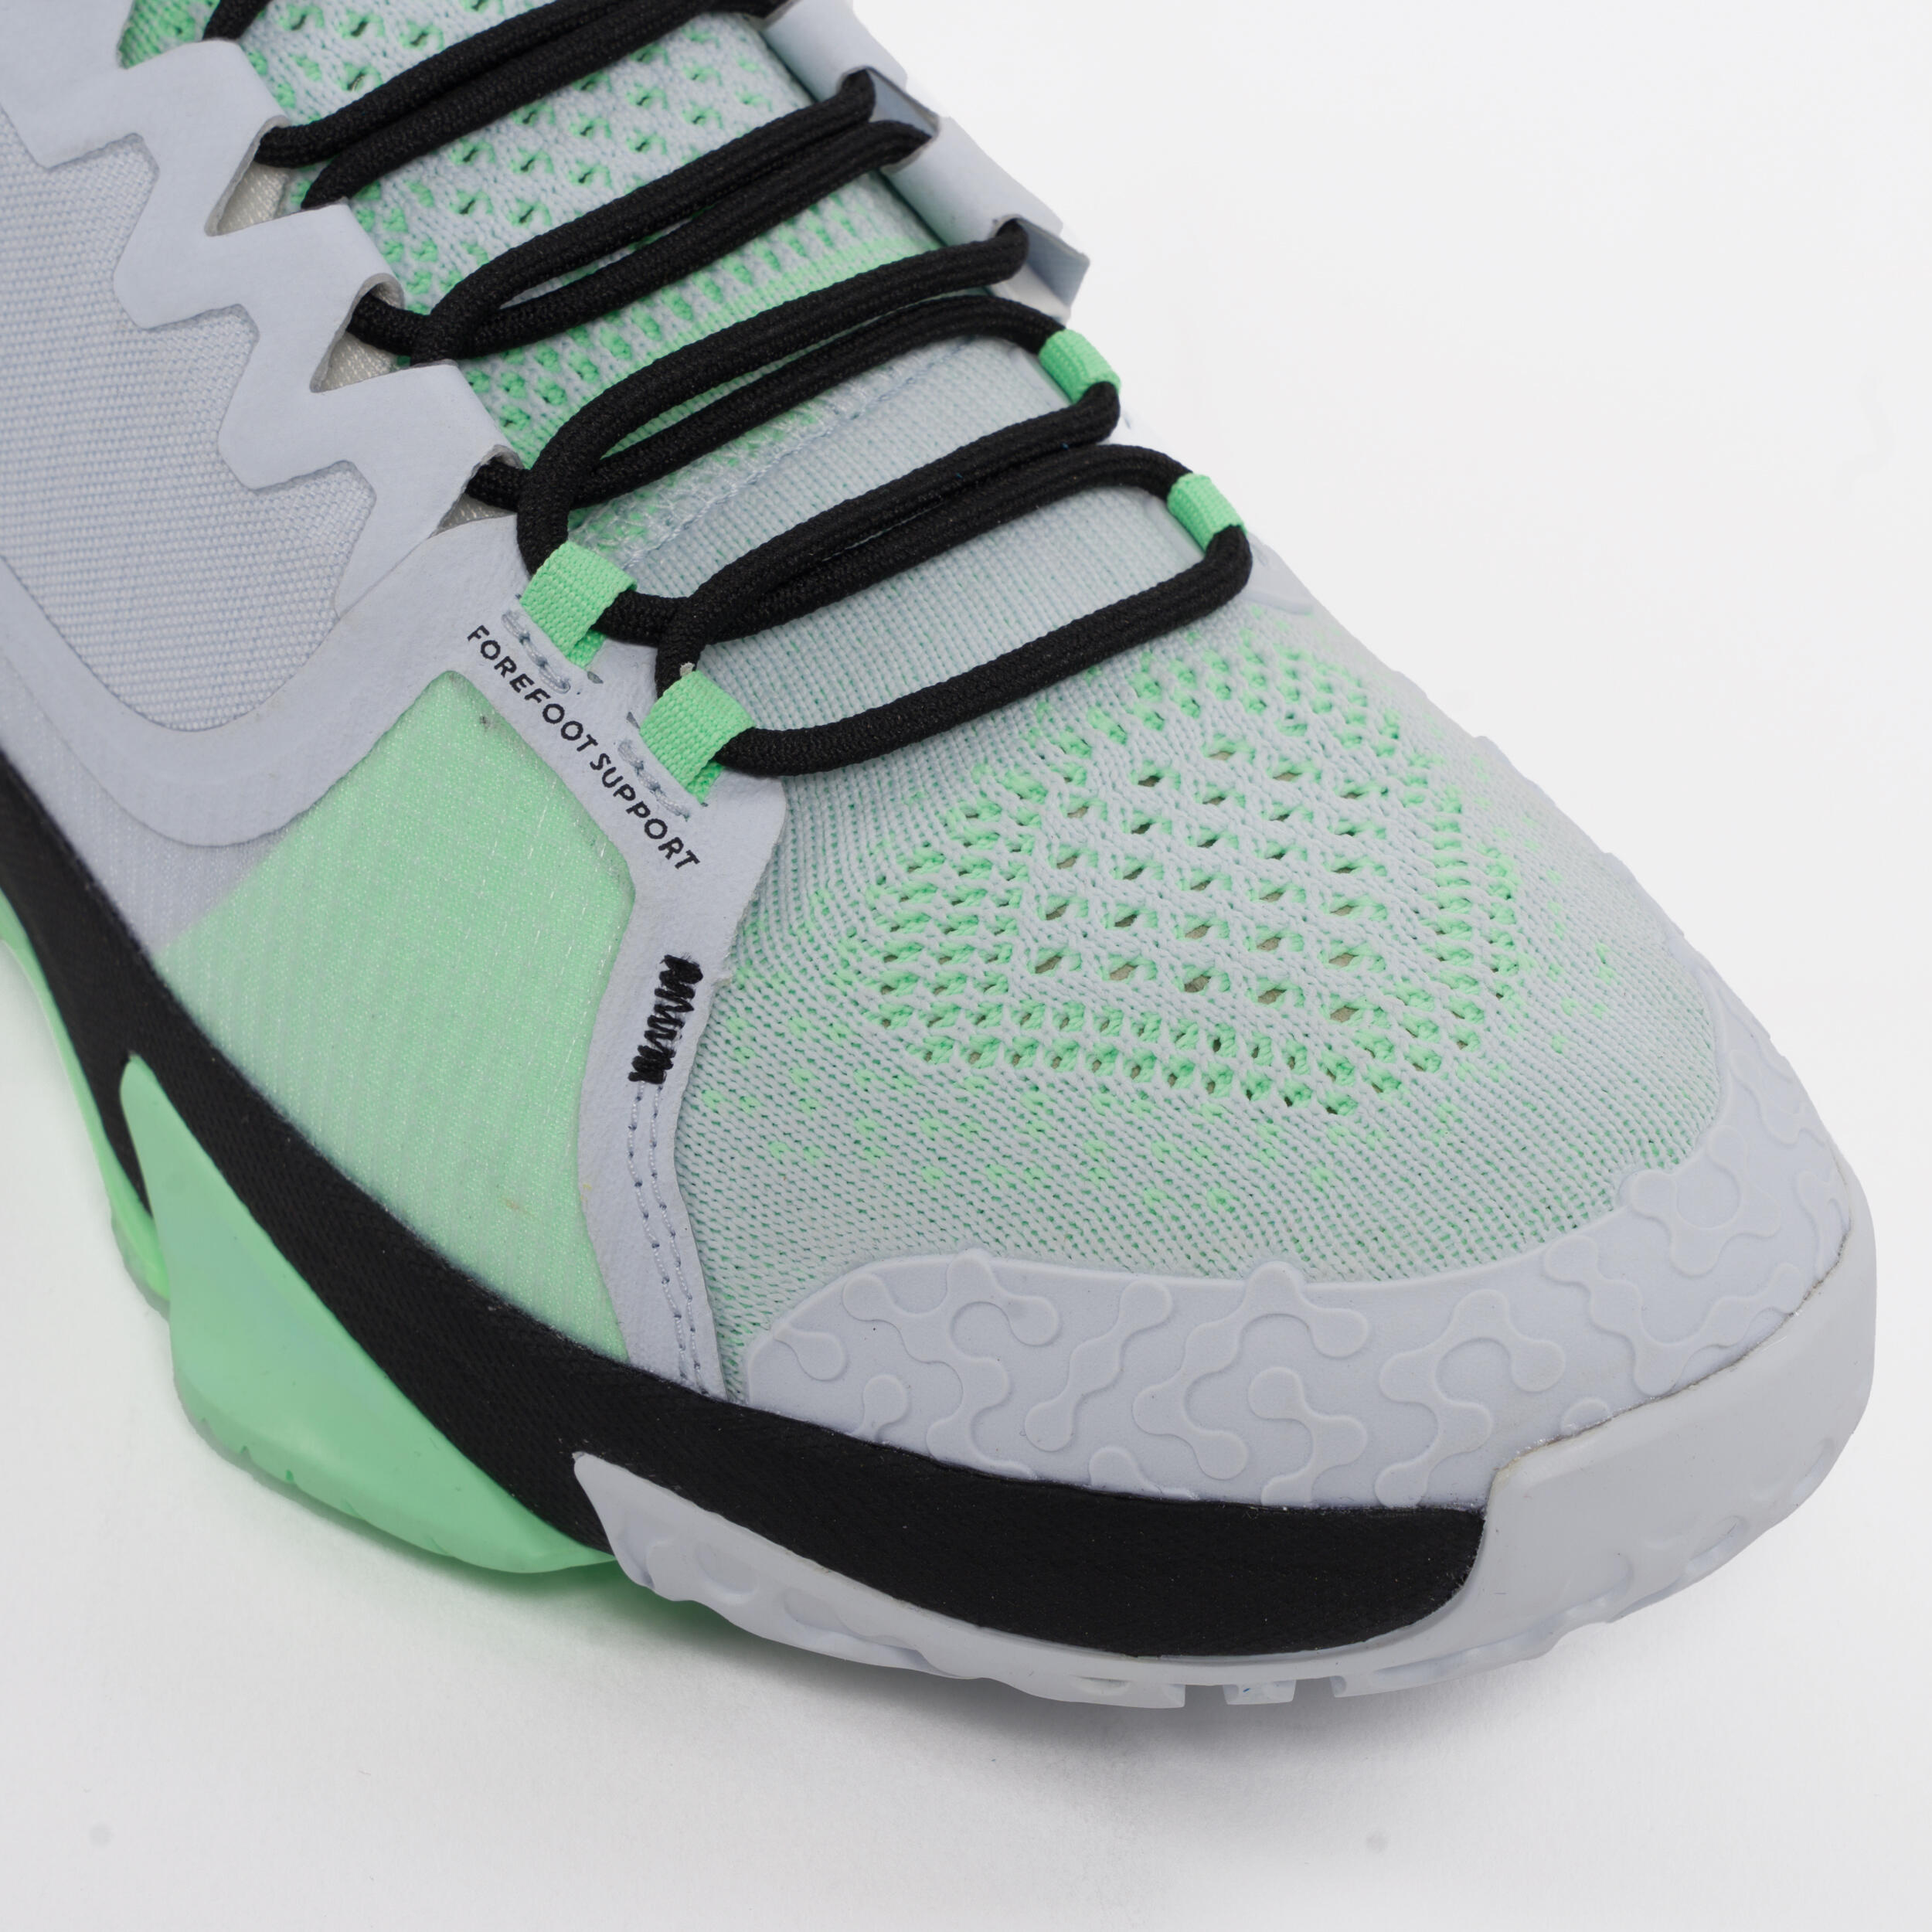 Padel Shoes PS Pro - Grey/Green 5/14